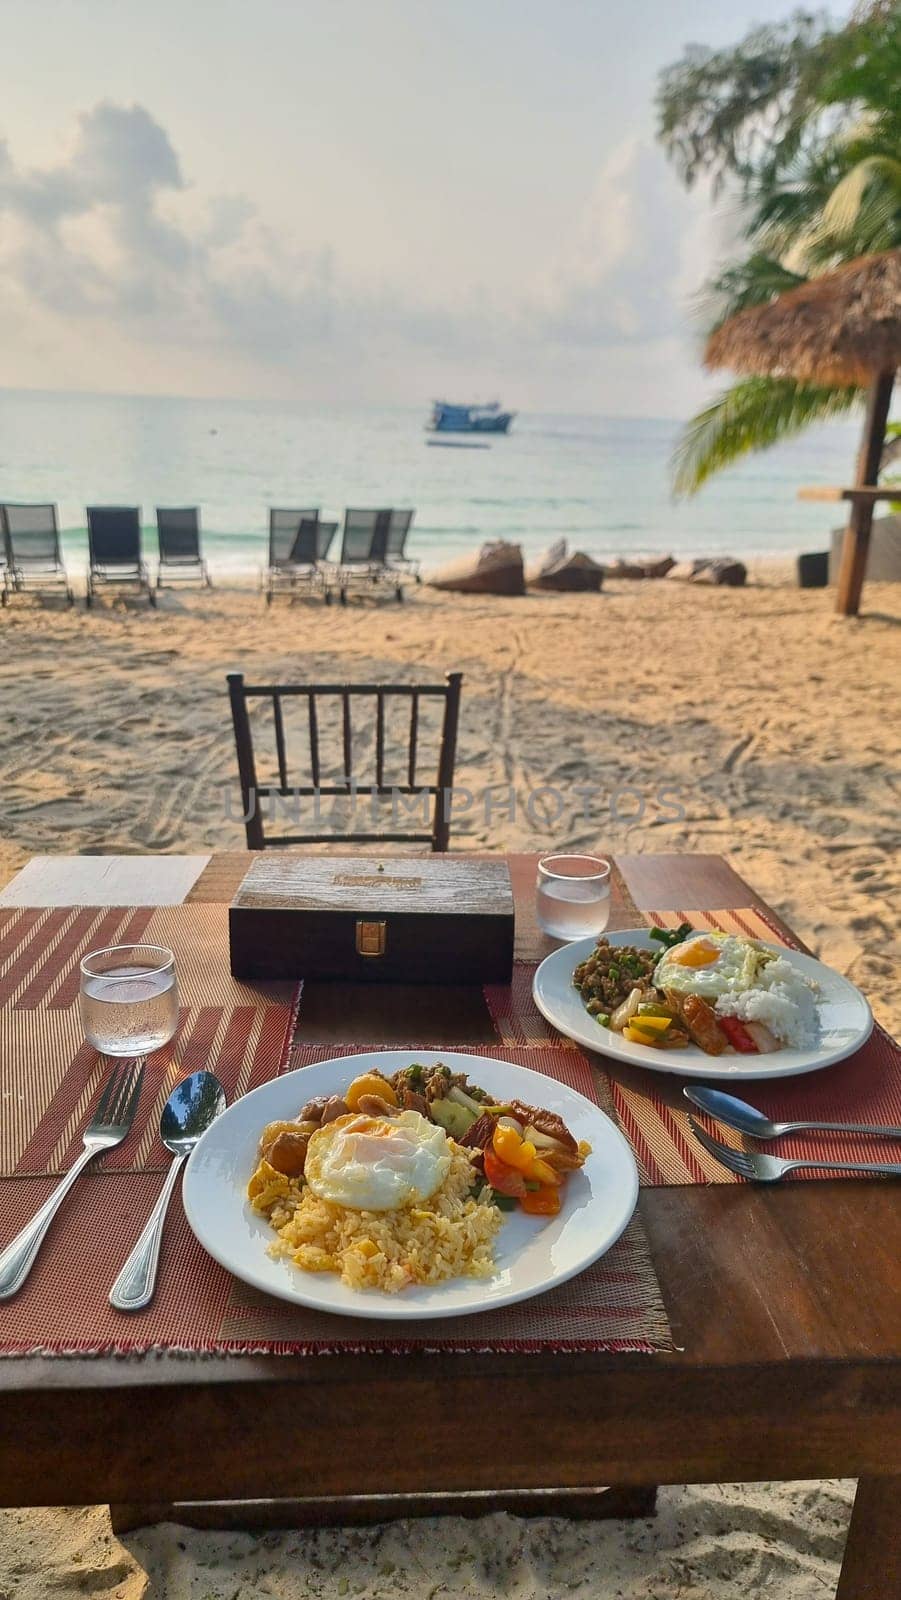 breakfast on the beach at the island of Koh Samet Thailand by fokkebok